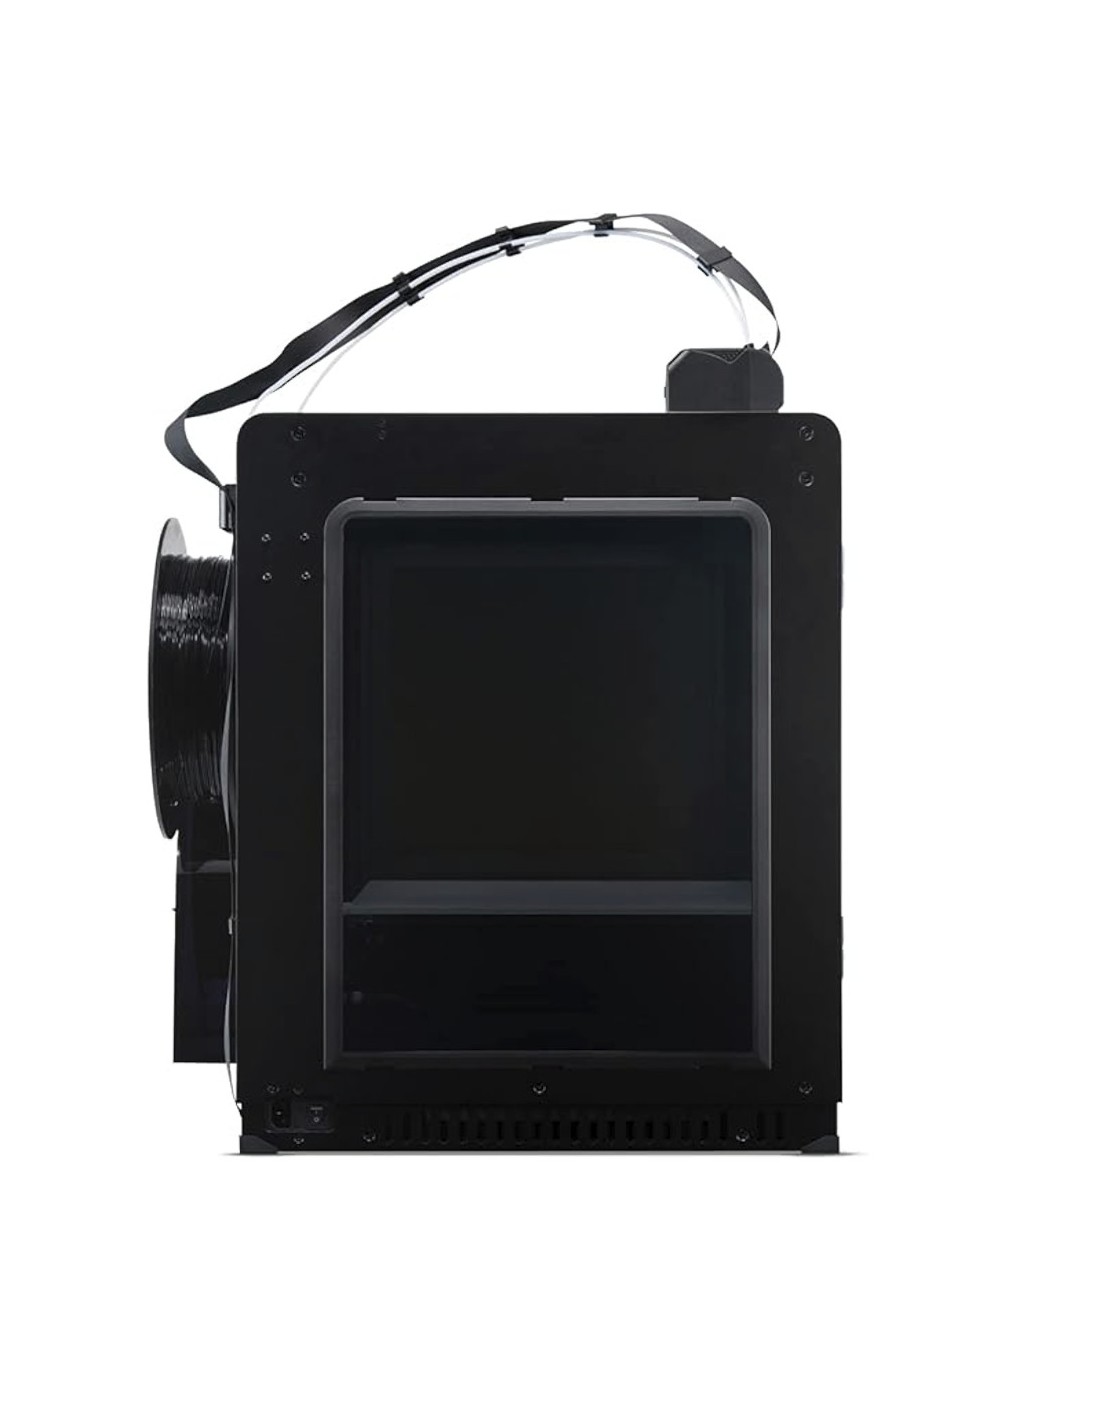 Zortrax M300 Dual - Imprimante 3D